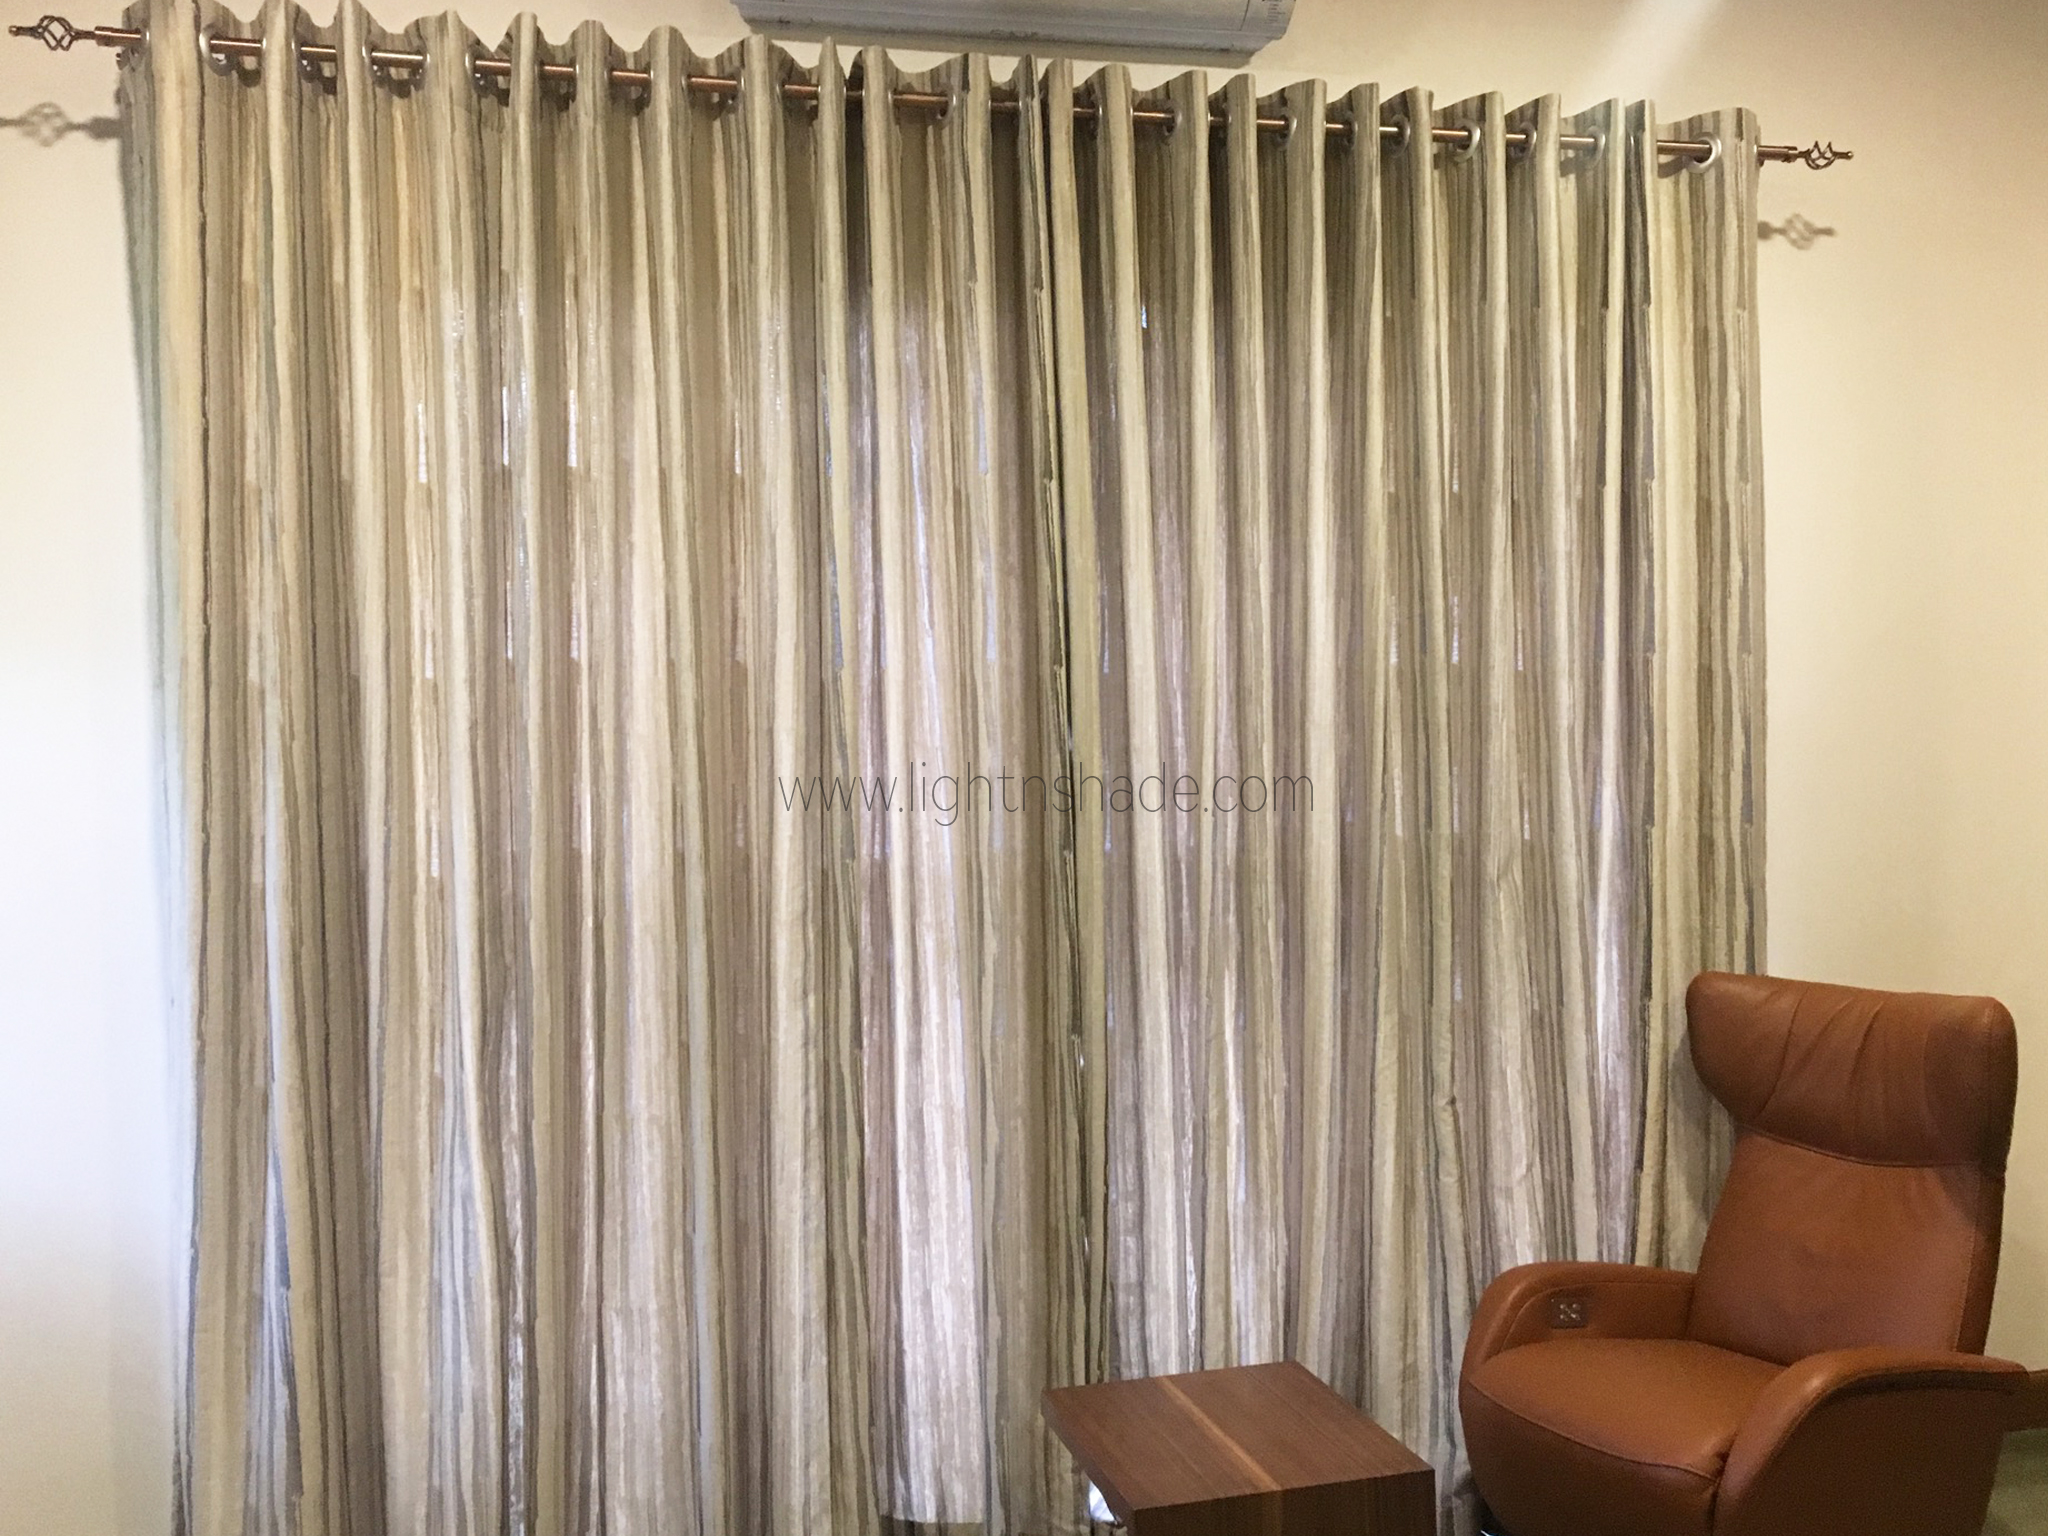 Pole Curtainslight Shade Sri Lanka Curtains And Blinds